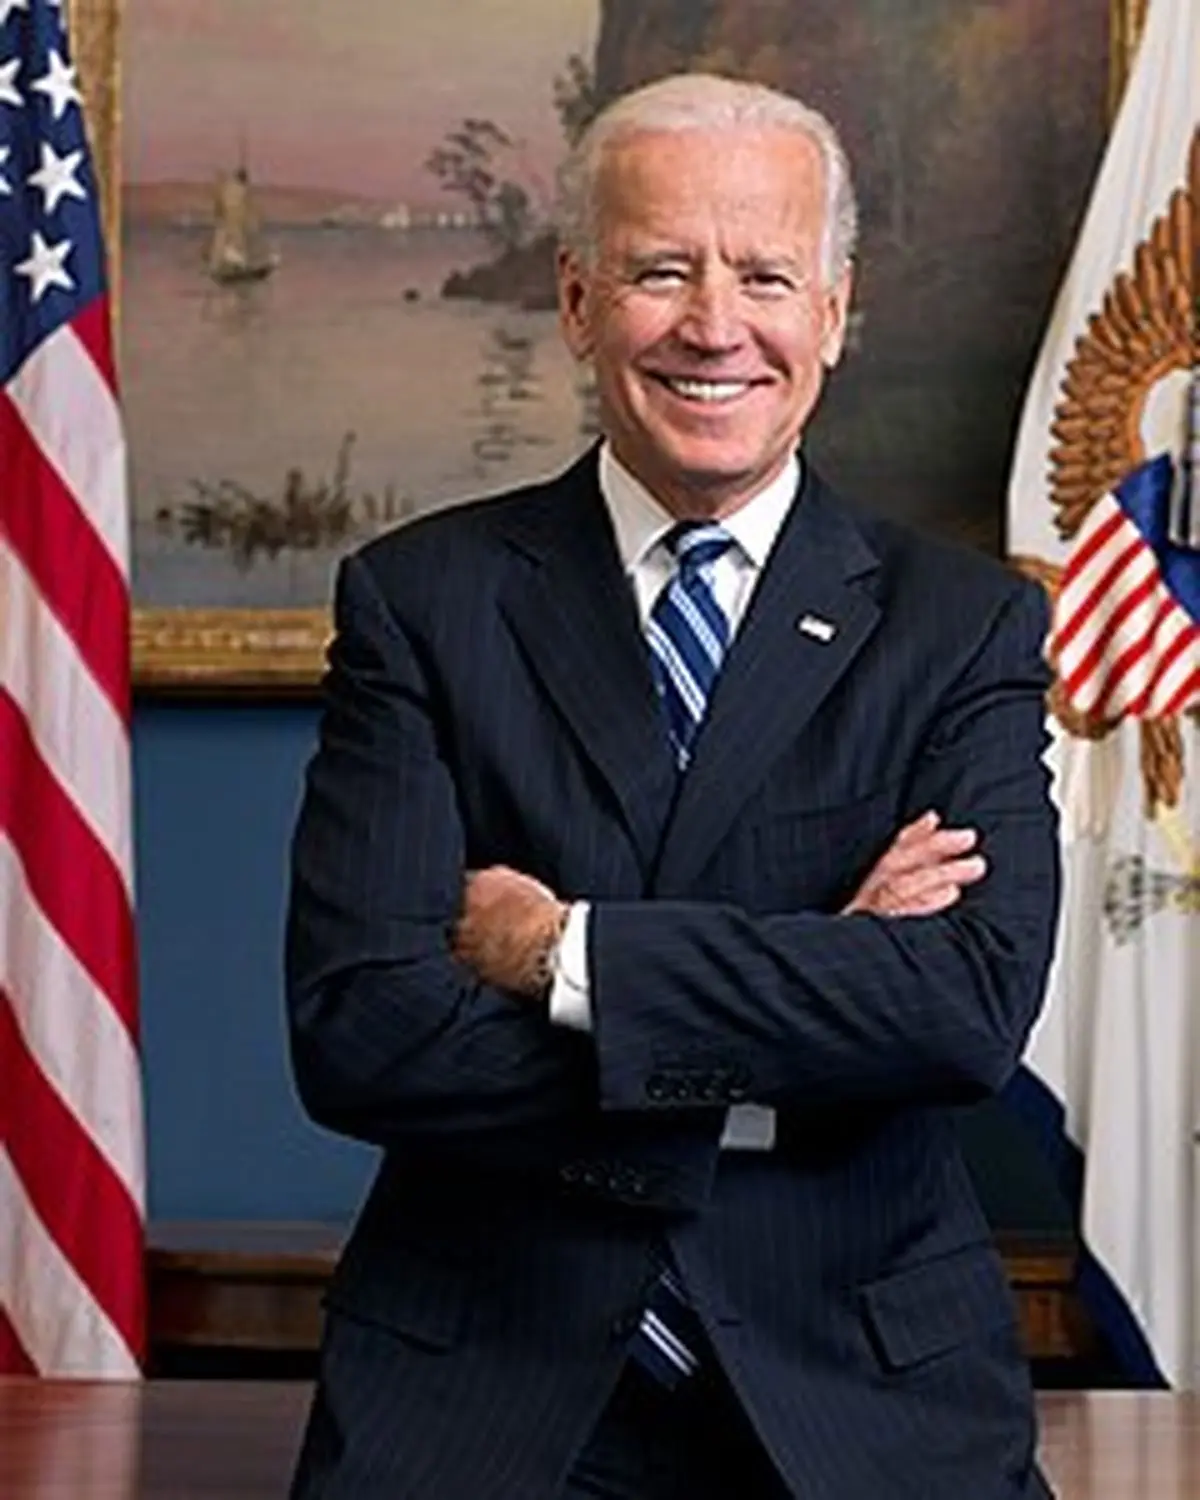 Joe Biden official portrait 2013.jpg